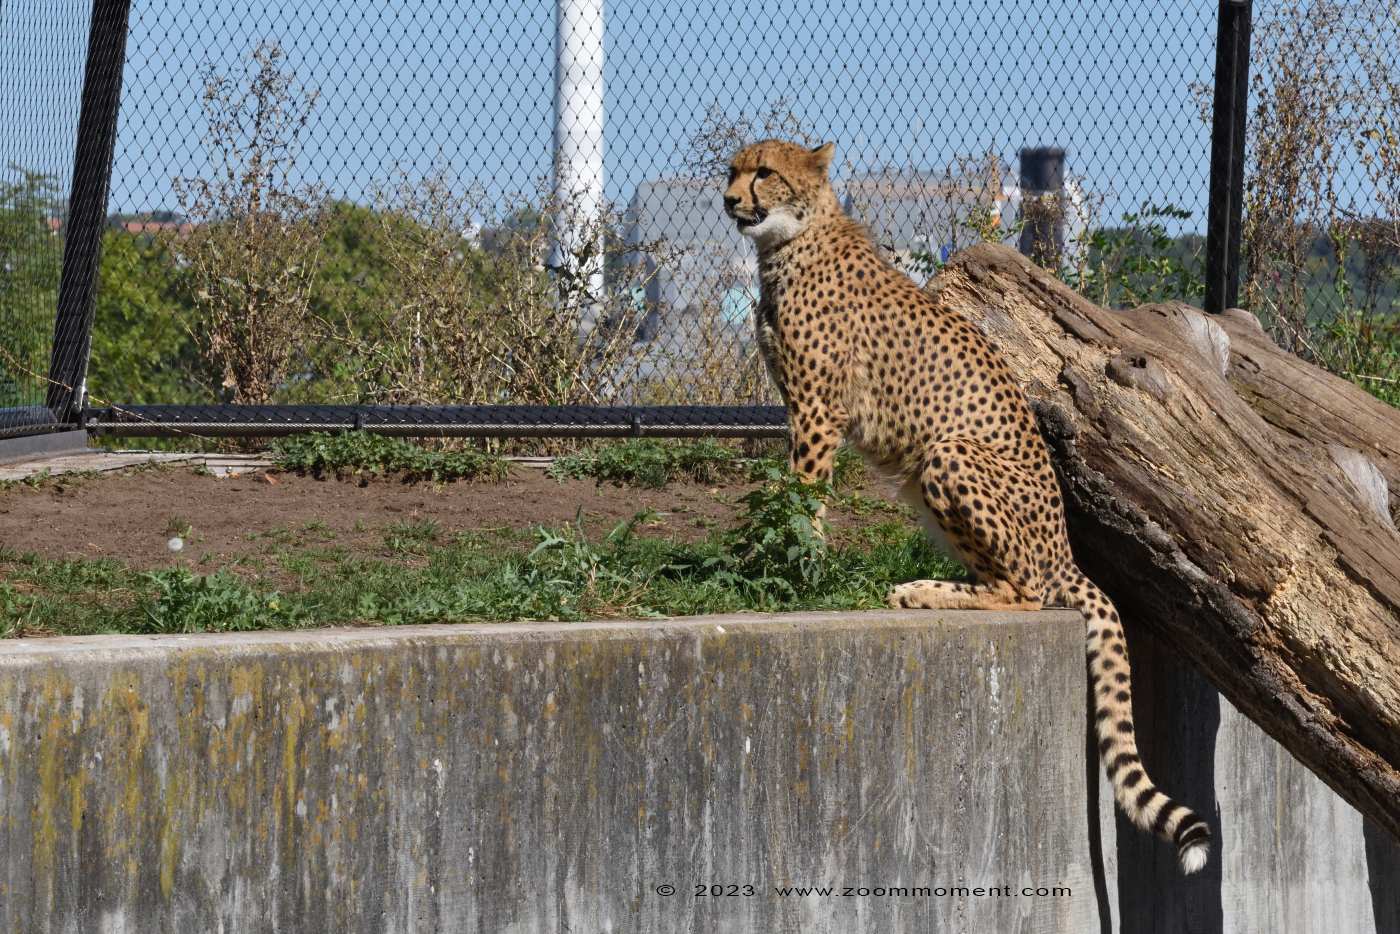 jachtluipaard ( Acinonyx jubatus ) cheetah
Trefwoorden: Wilhelma Stuttgart Germany jachtluipaard Acinonyx jubatus cheetah